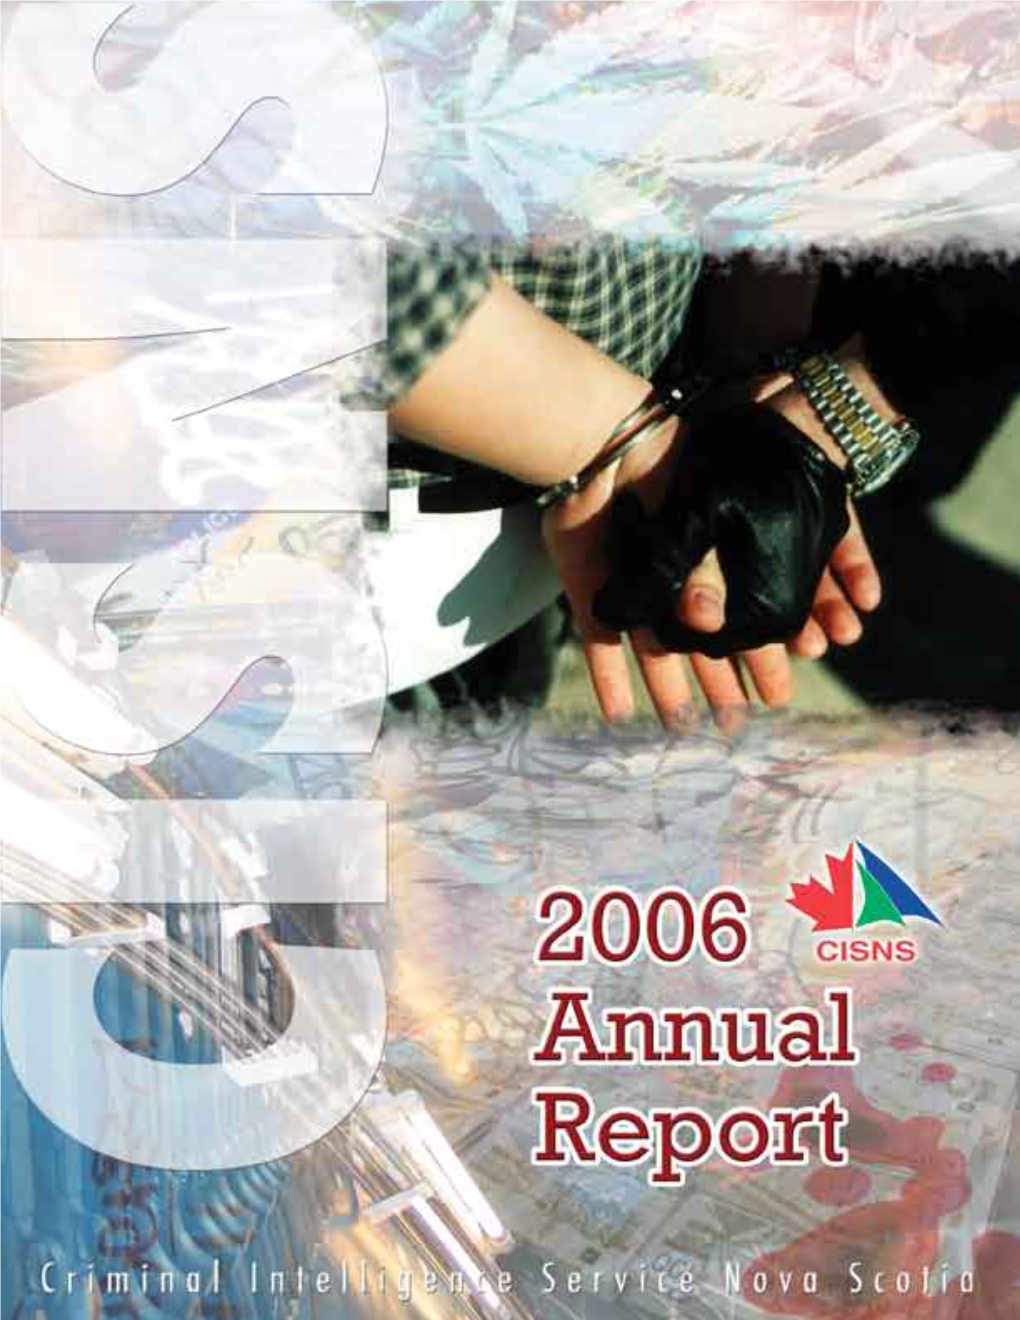 Criminal Intelligence Service Nova Scotia (CISNS) Annual Report 2006